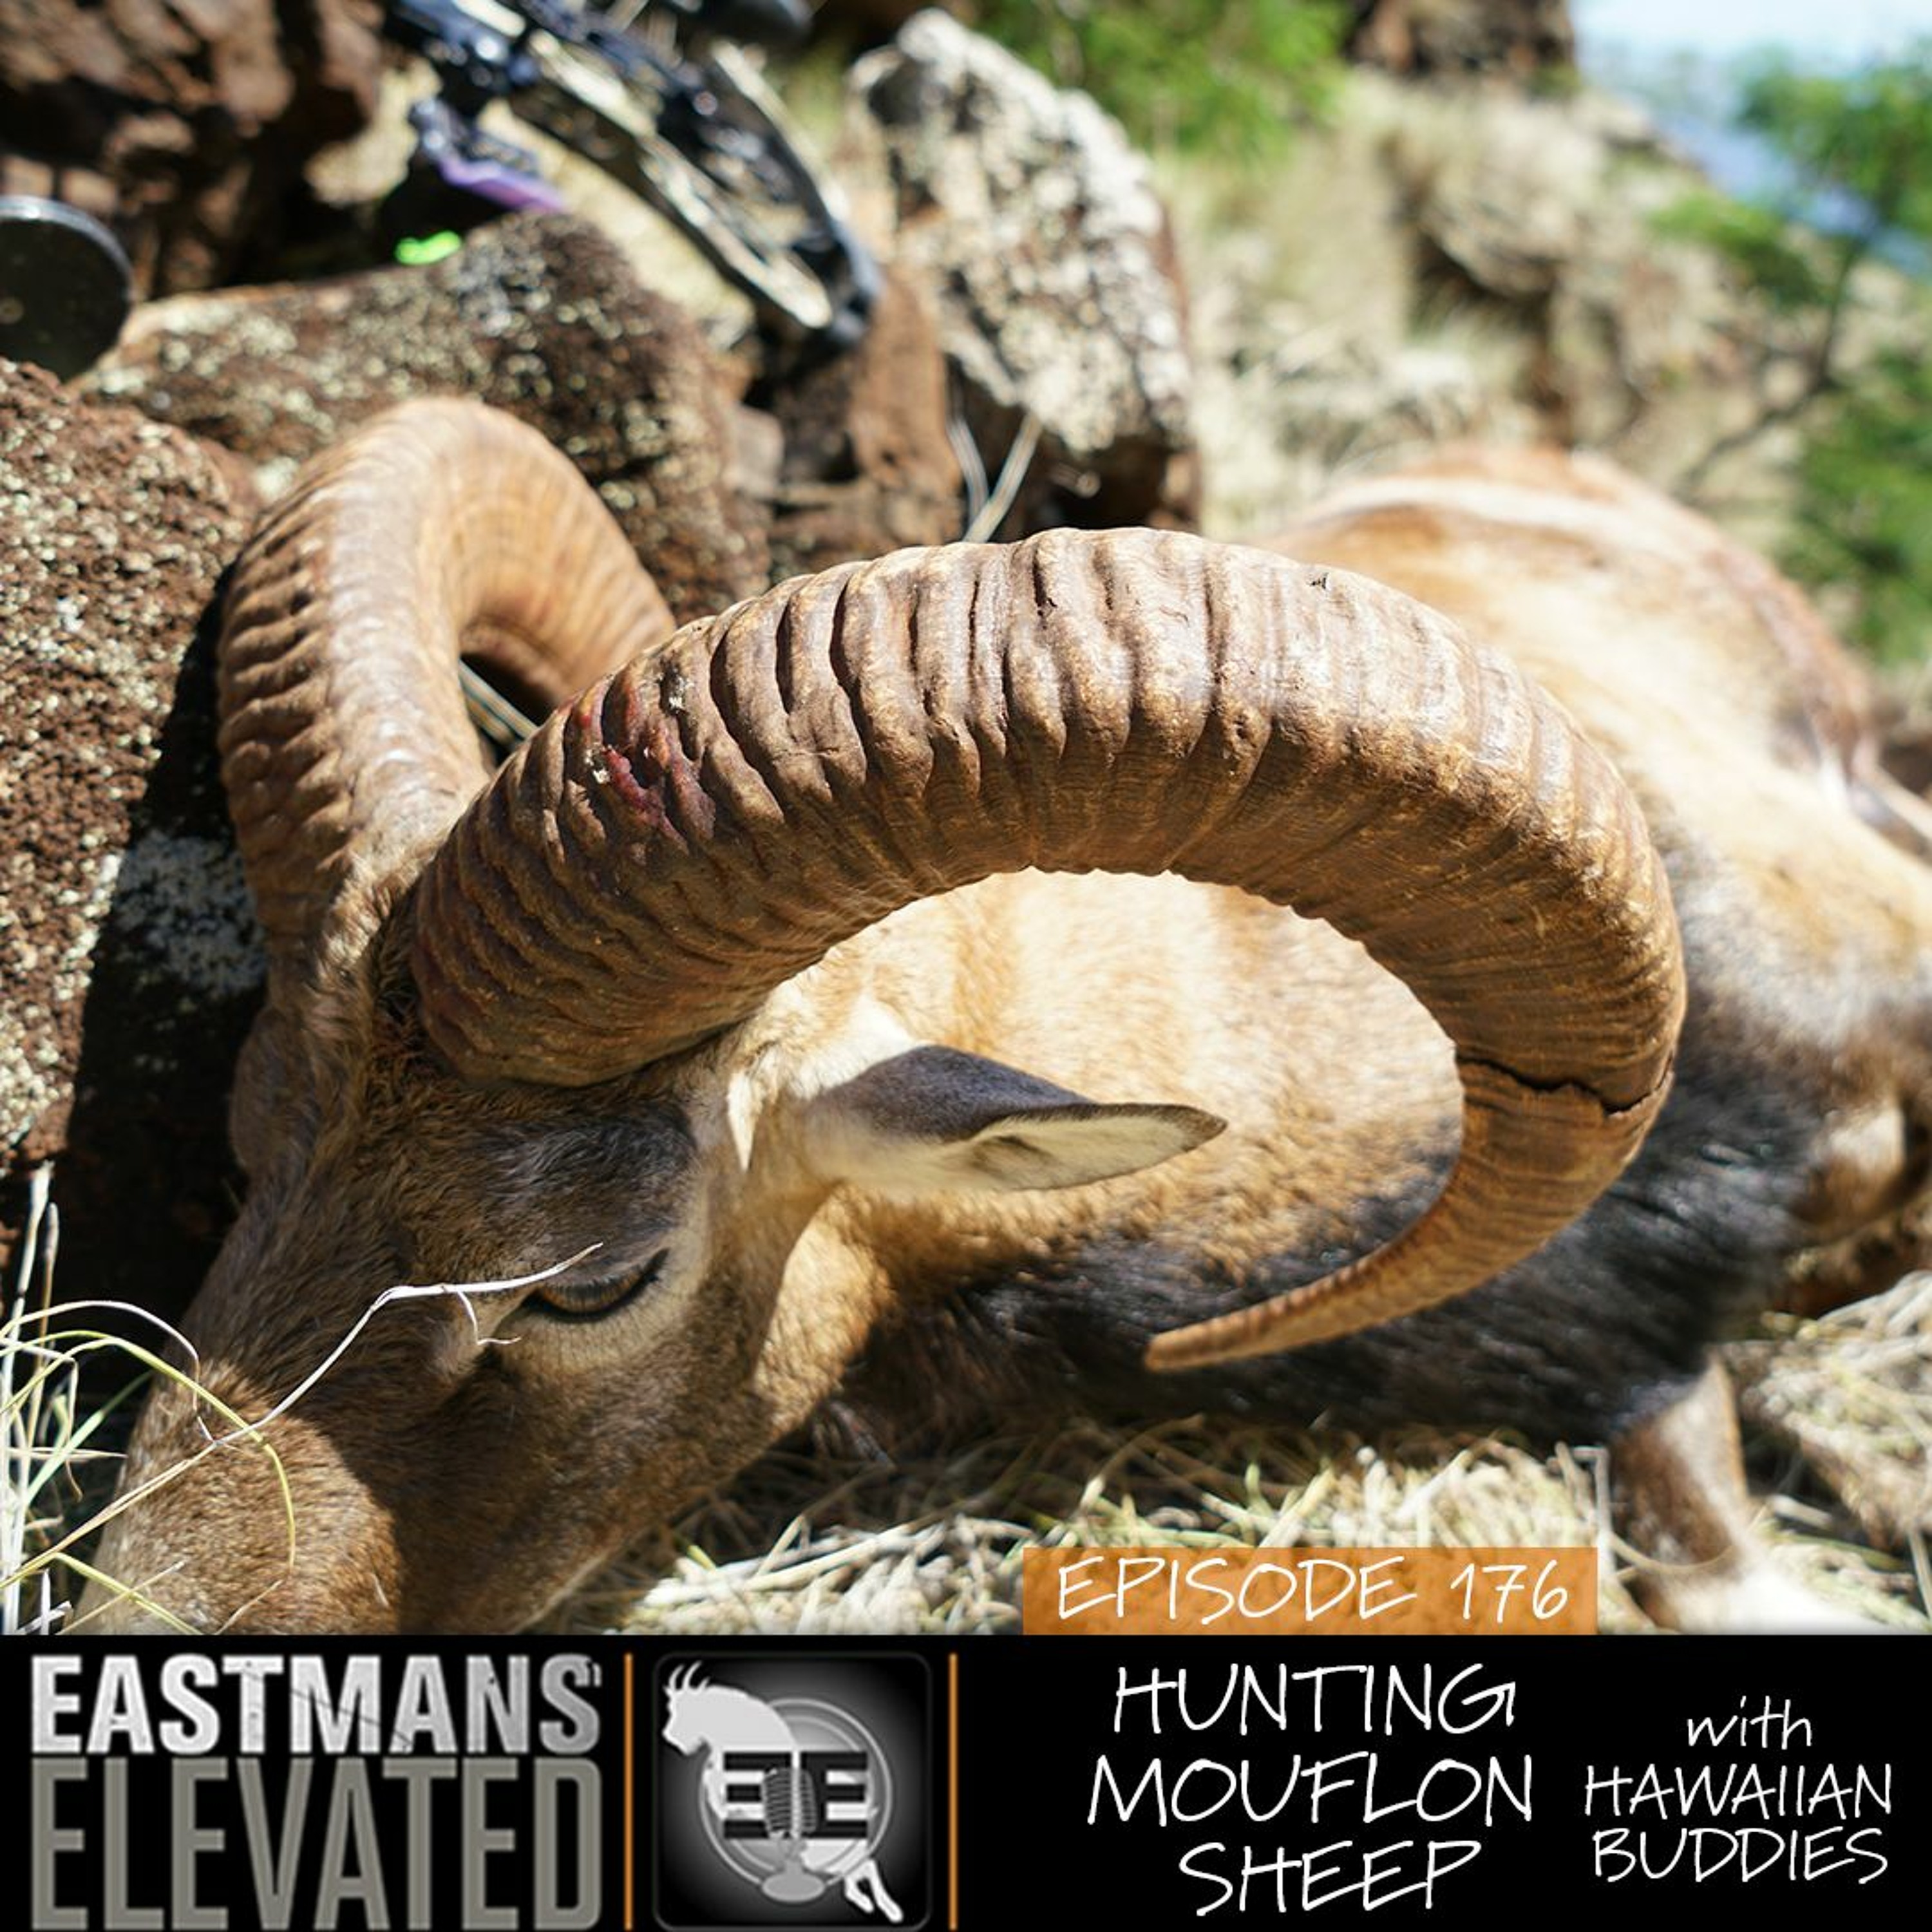 Episode 176: Hunting Mouflon Sheep with My Hawaii Buddies